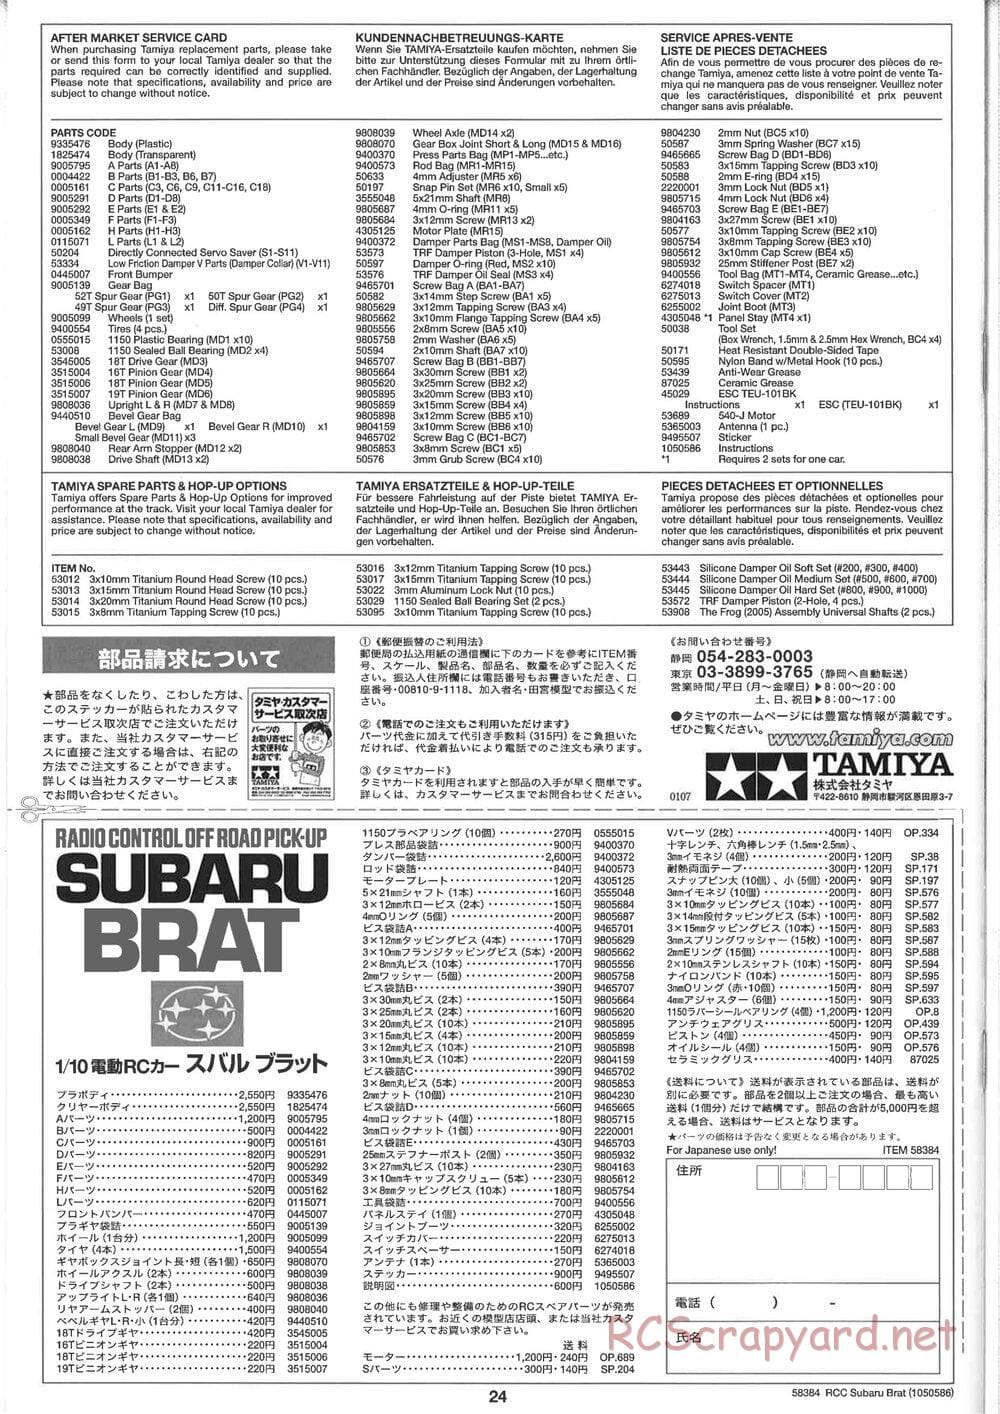 Tamiya - Subaru Brat 2007 - ORV Chassis - Manual - Page 24